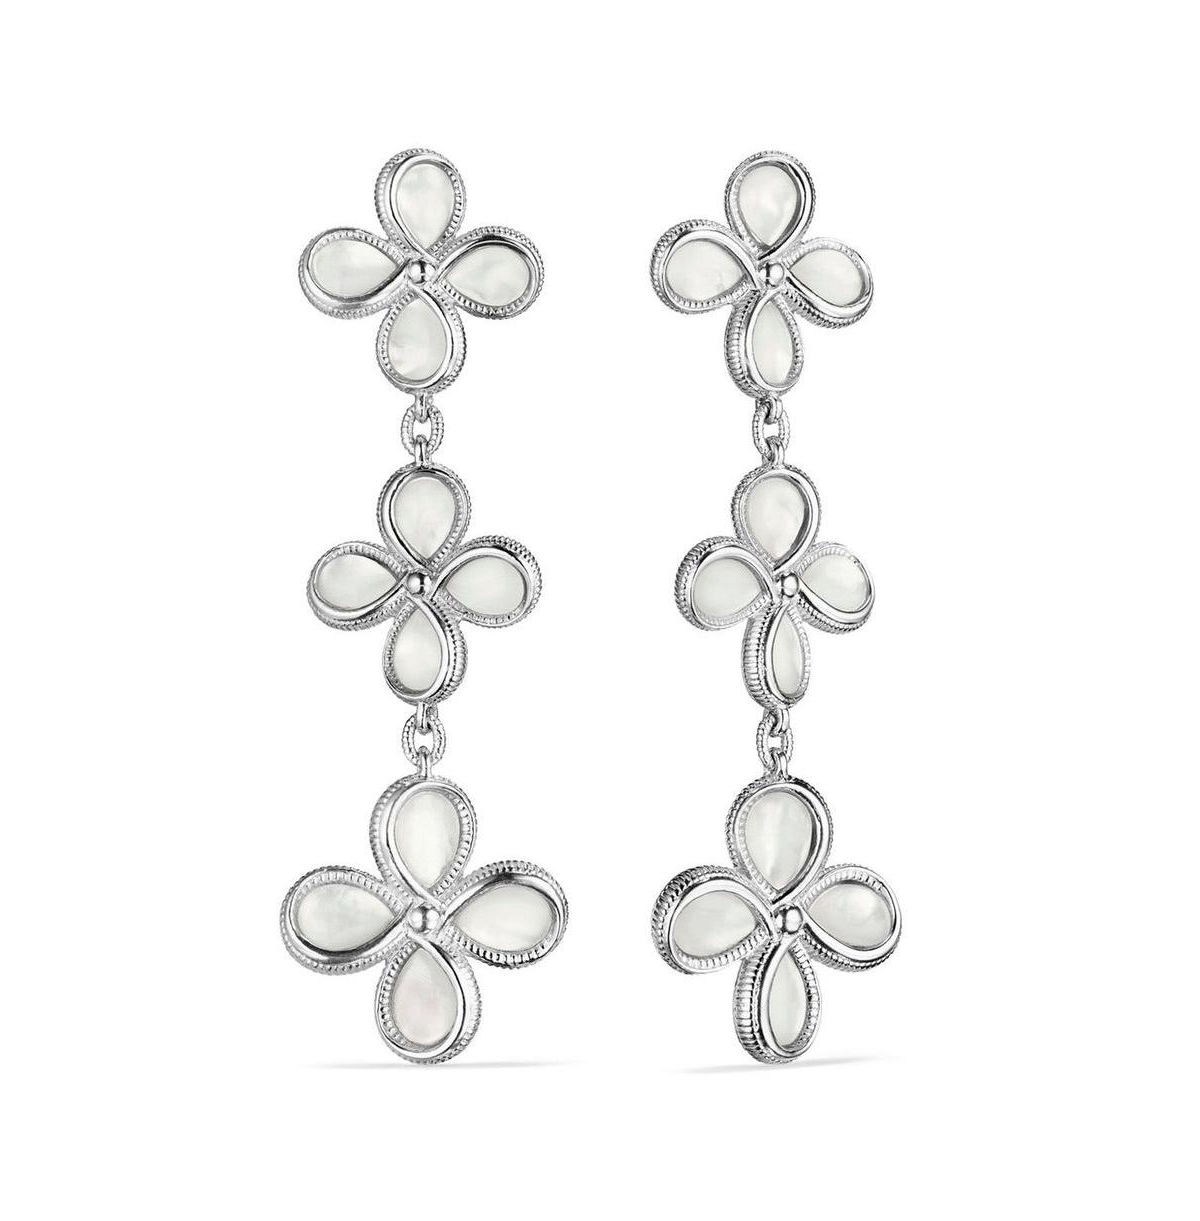 Jardin Triple Drop Earrings with Mother of Pearl - Silver/white